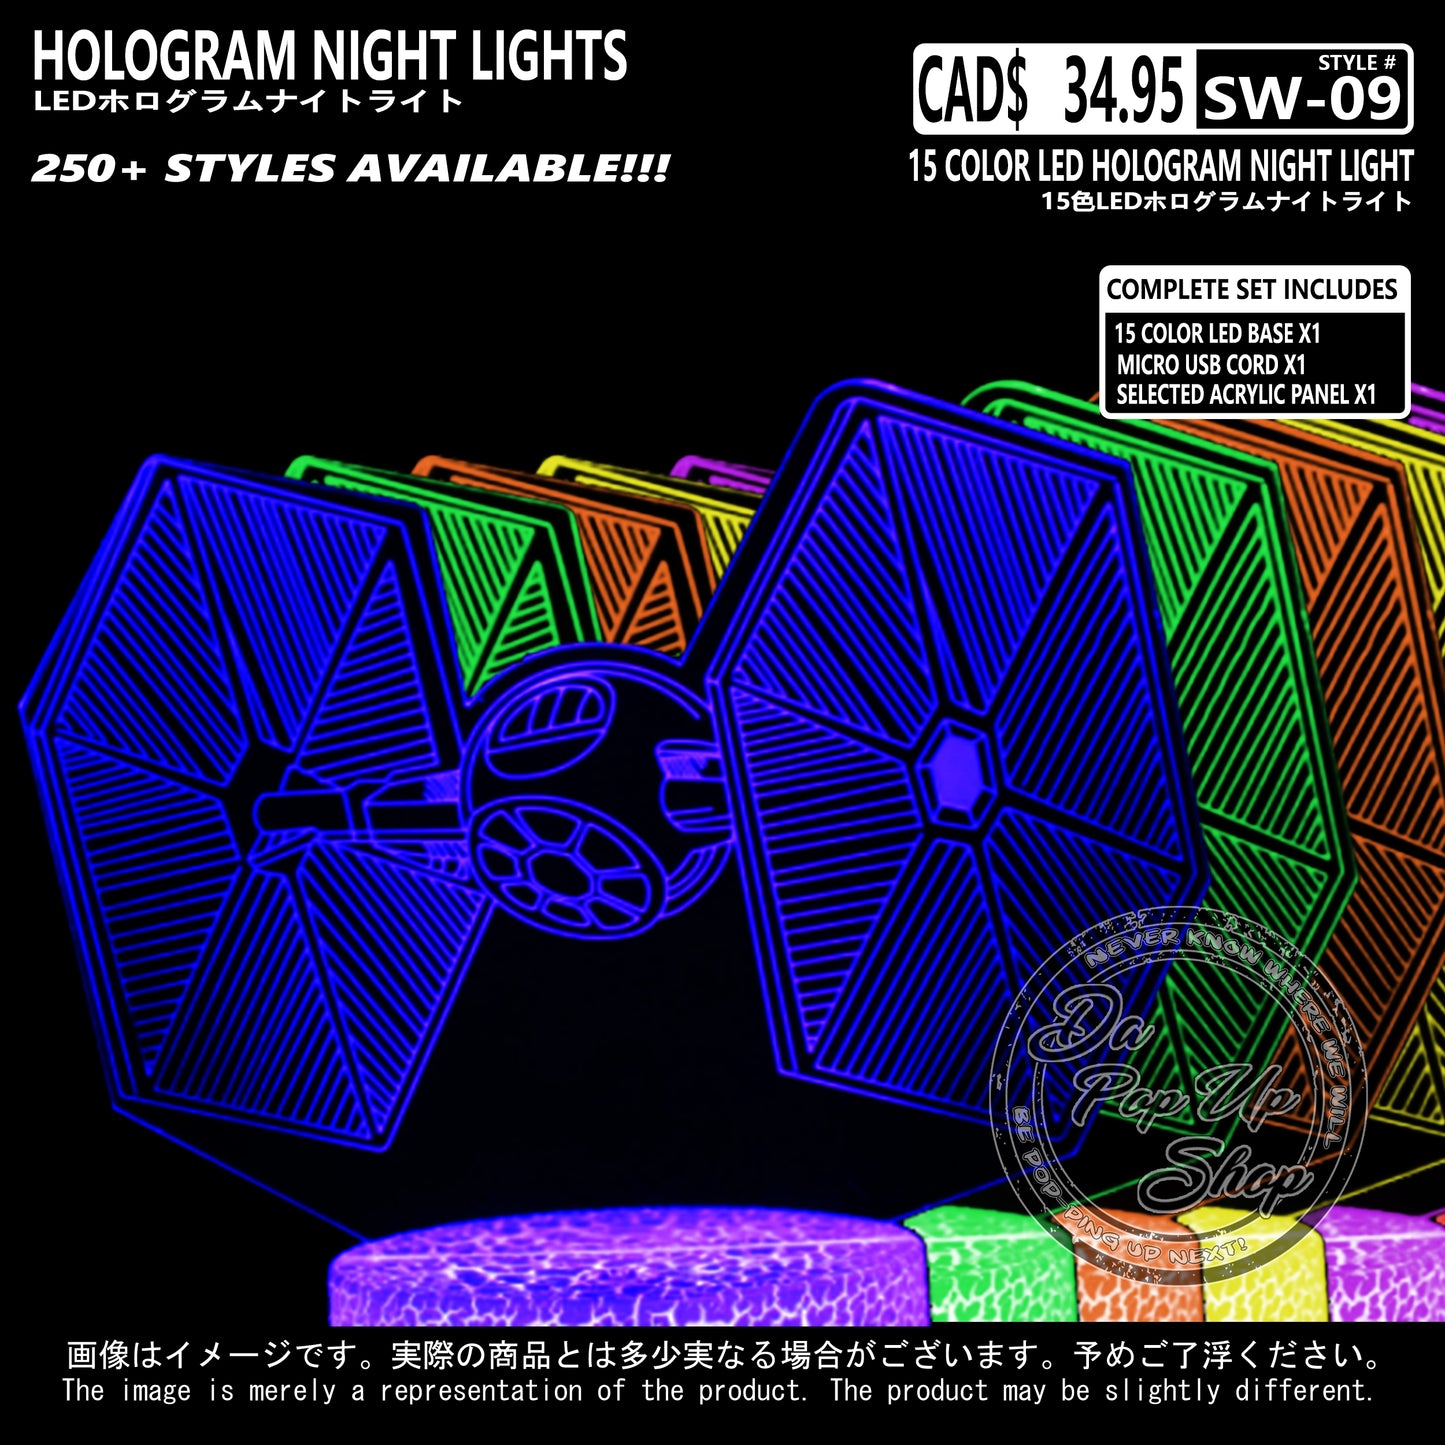 (SW-09) TIE FIGHTER Star Wars Hologram LED Night Light